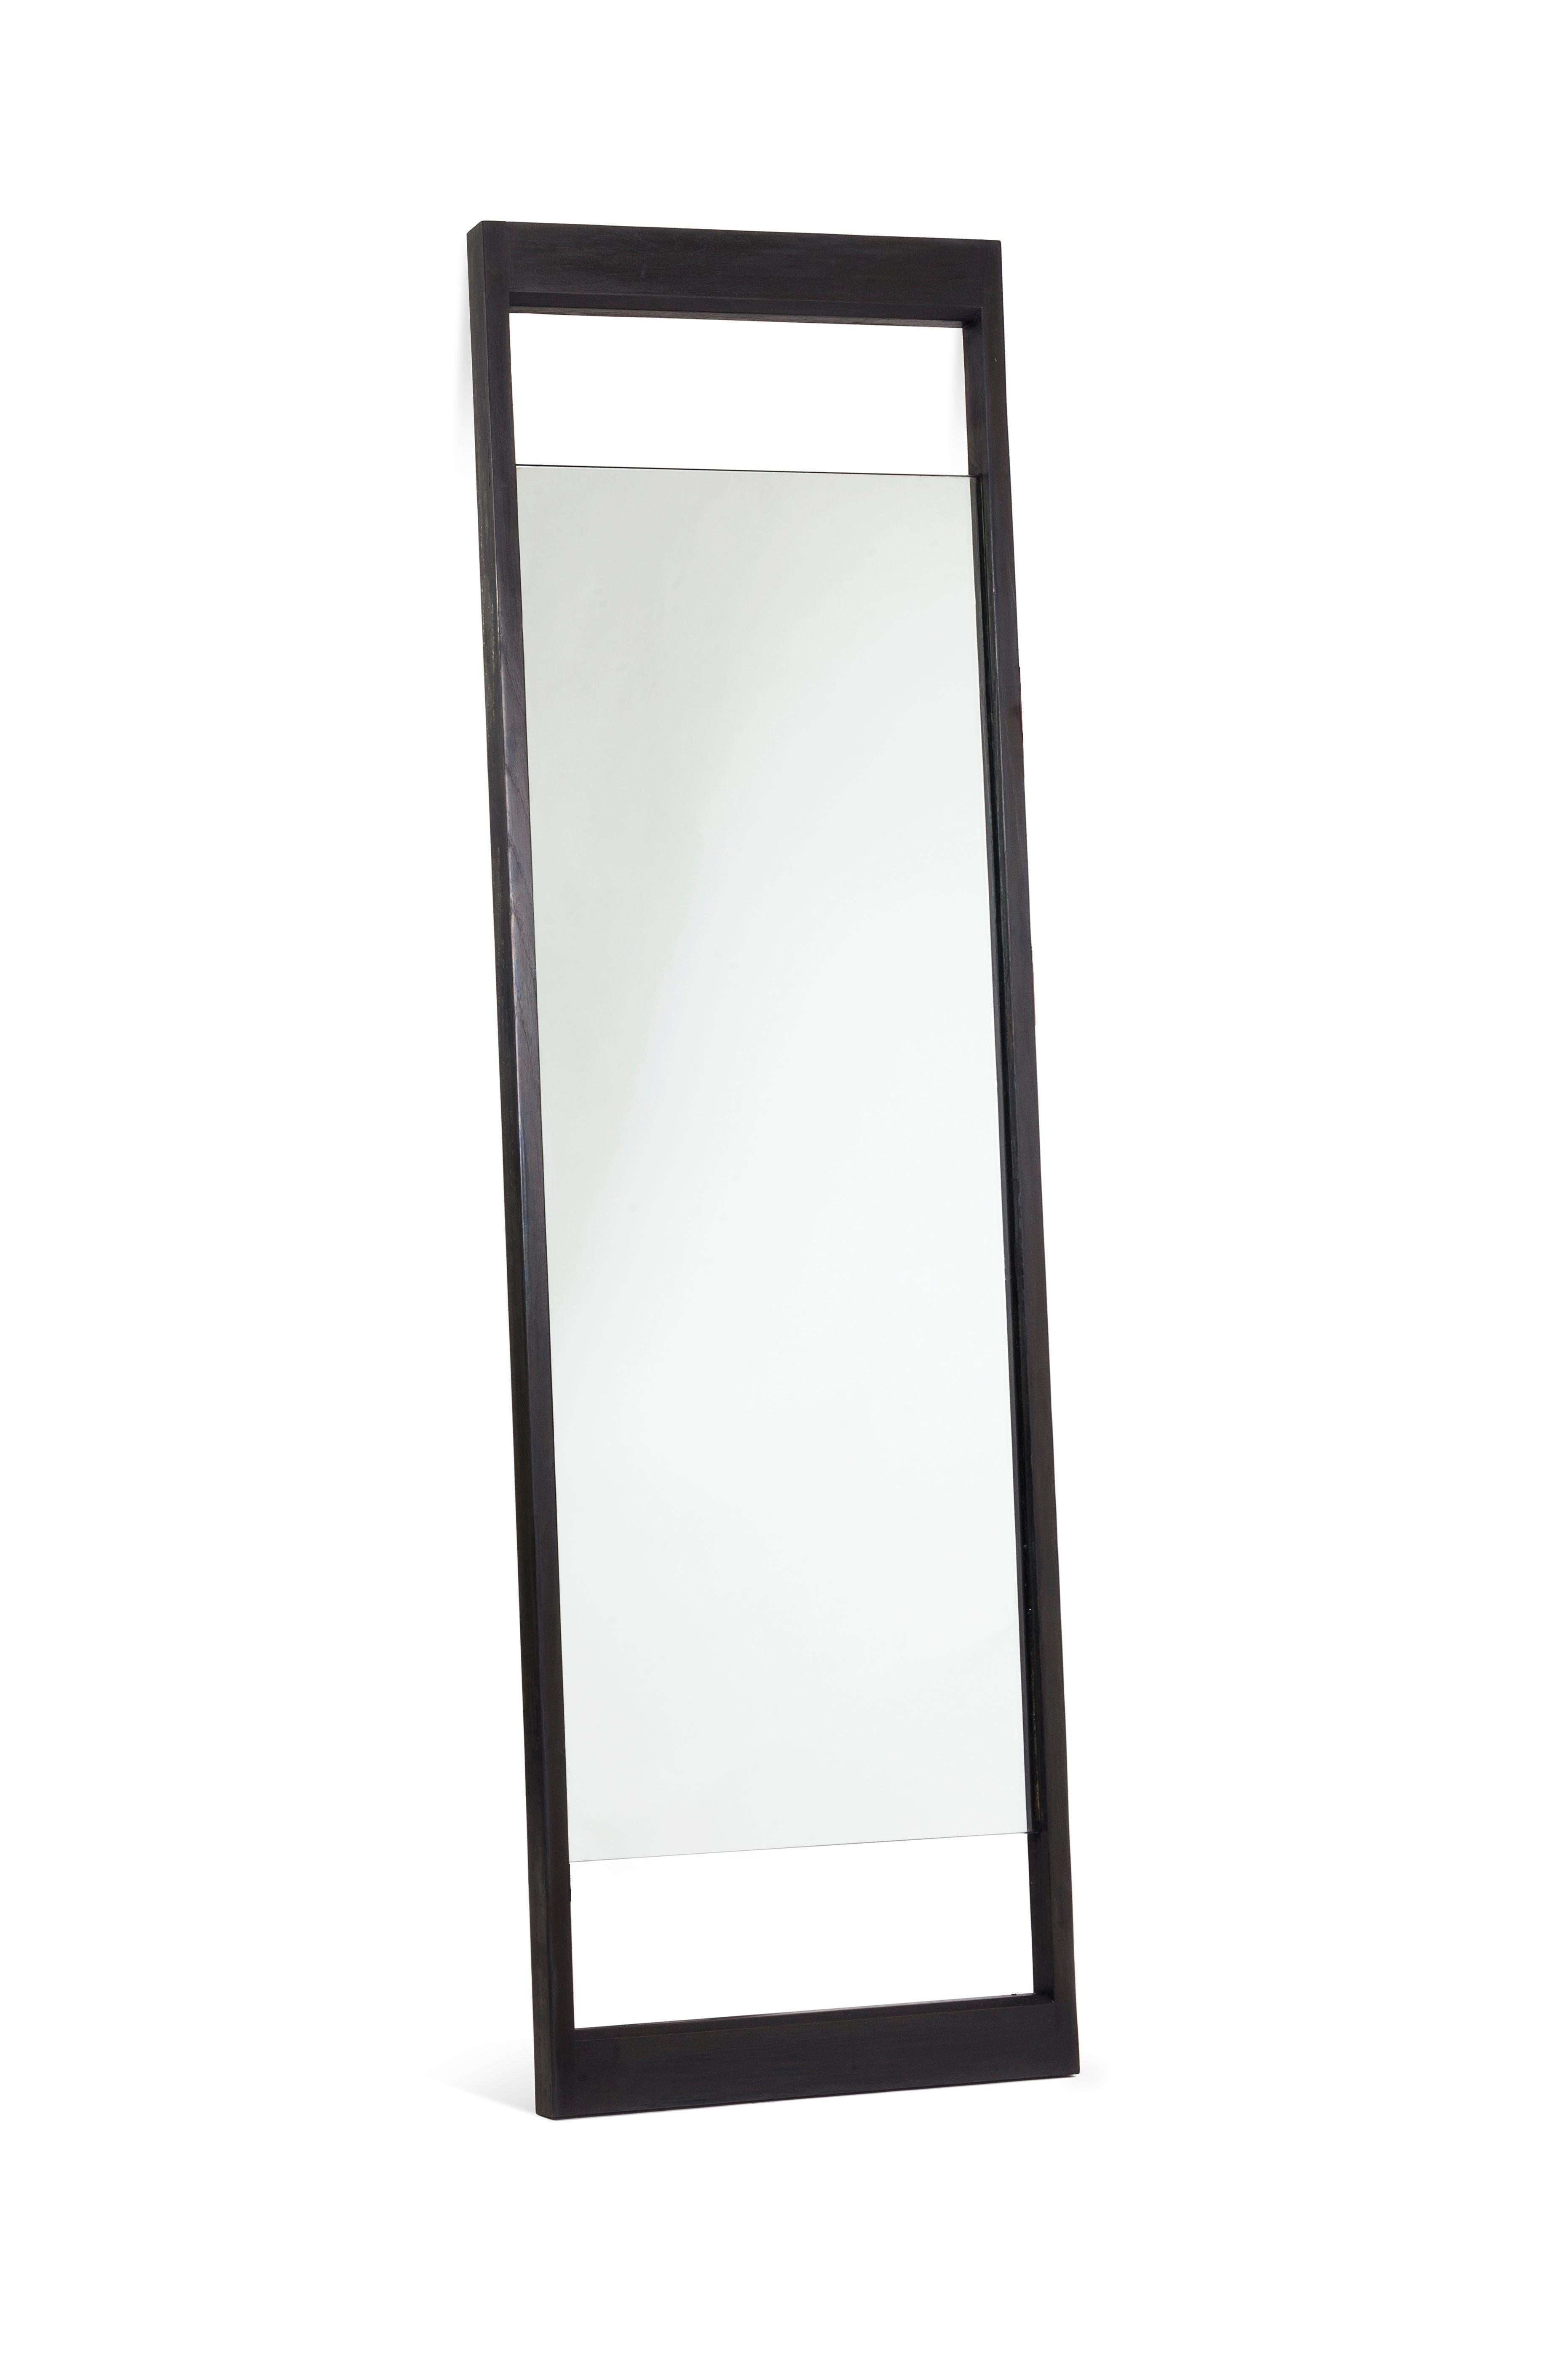 Modern Mirror DEDO, Mexican Contemporary Design by Emiliano Molina for CUCHARA For Sale